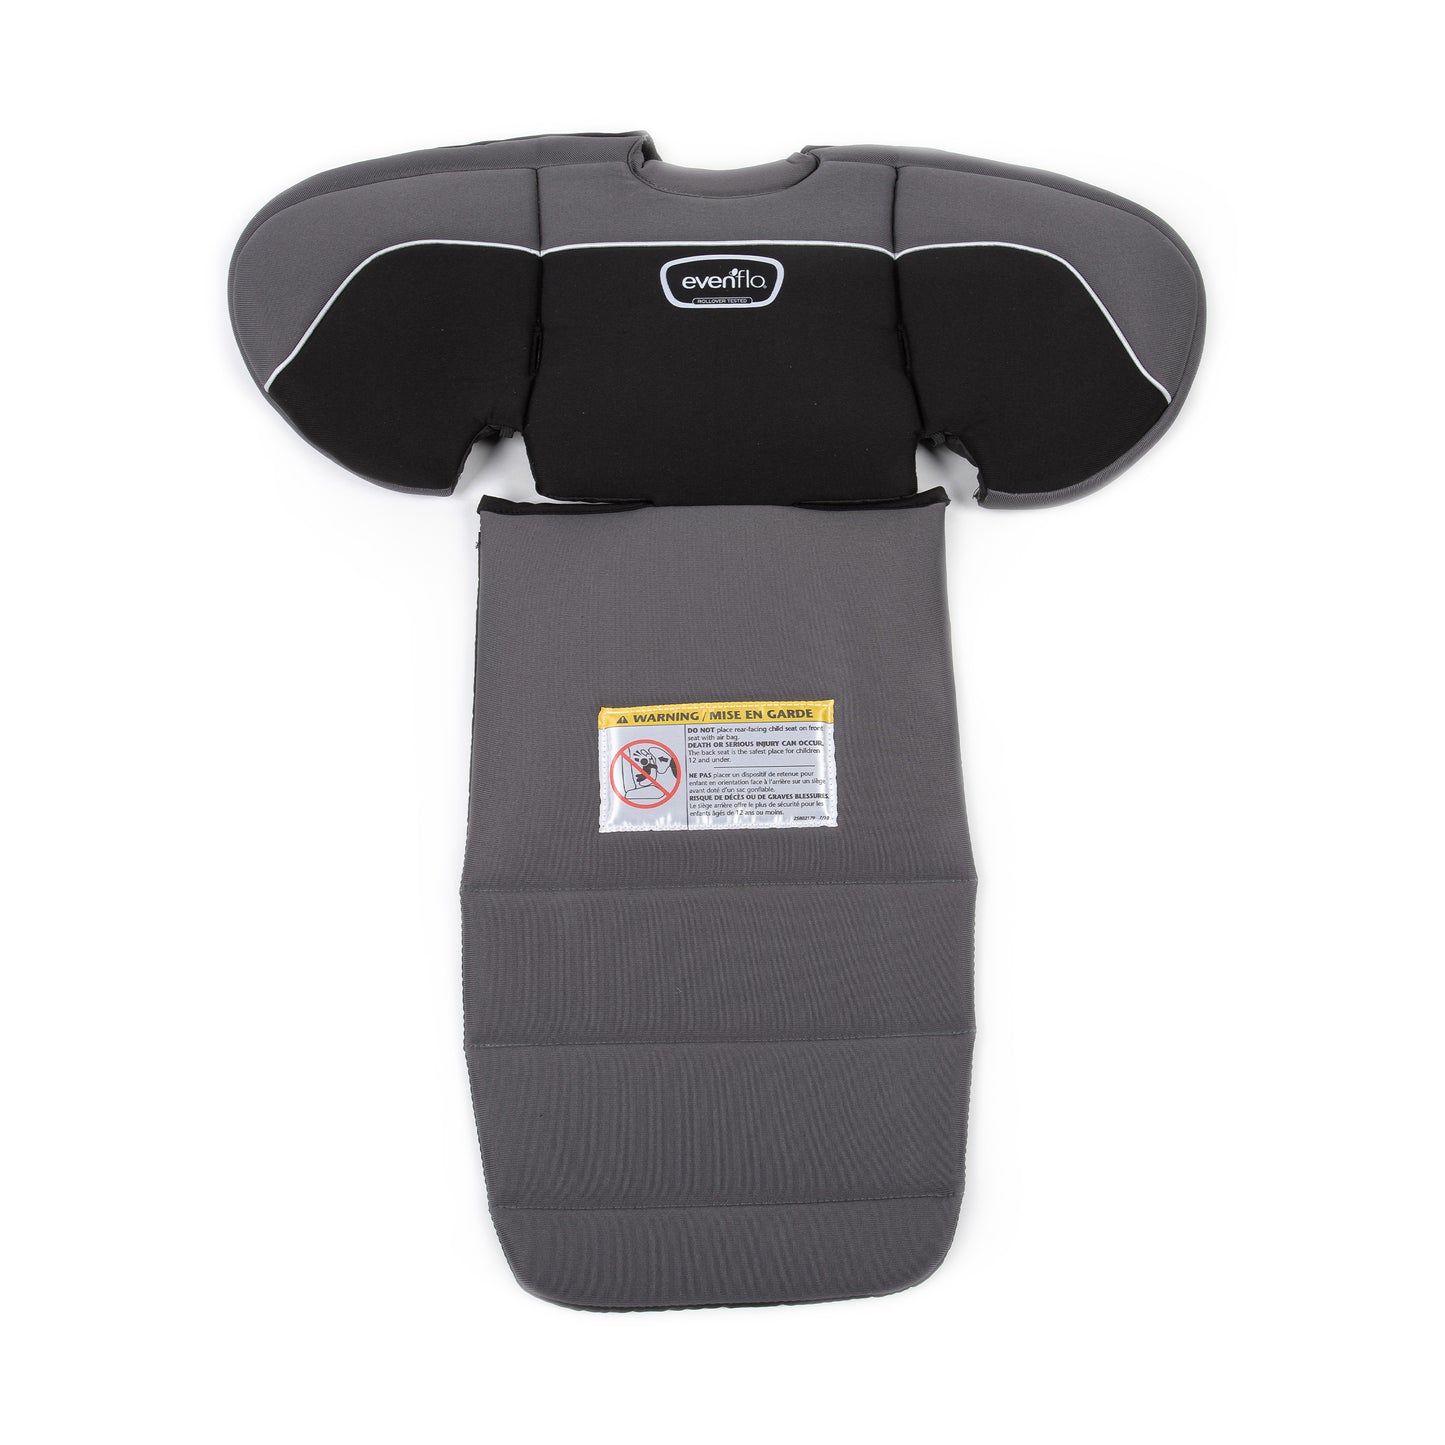 Revolve360 Convertible Replacement Headrest